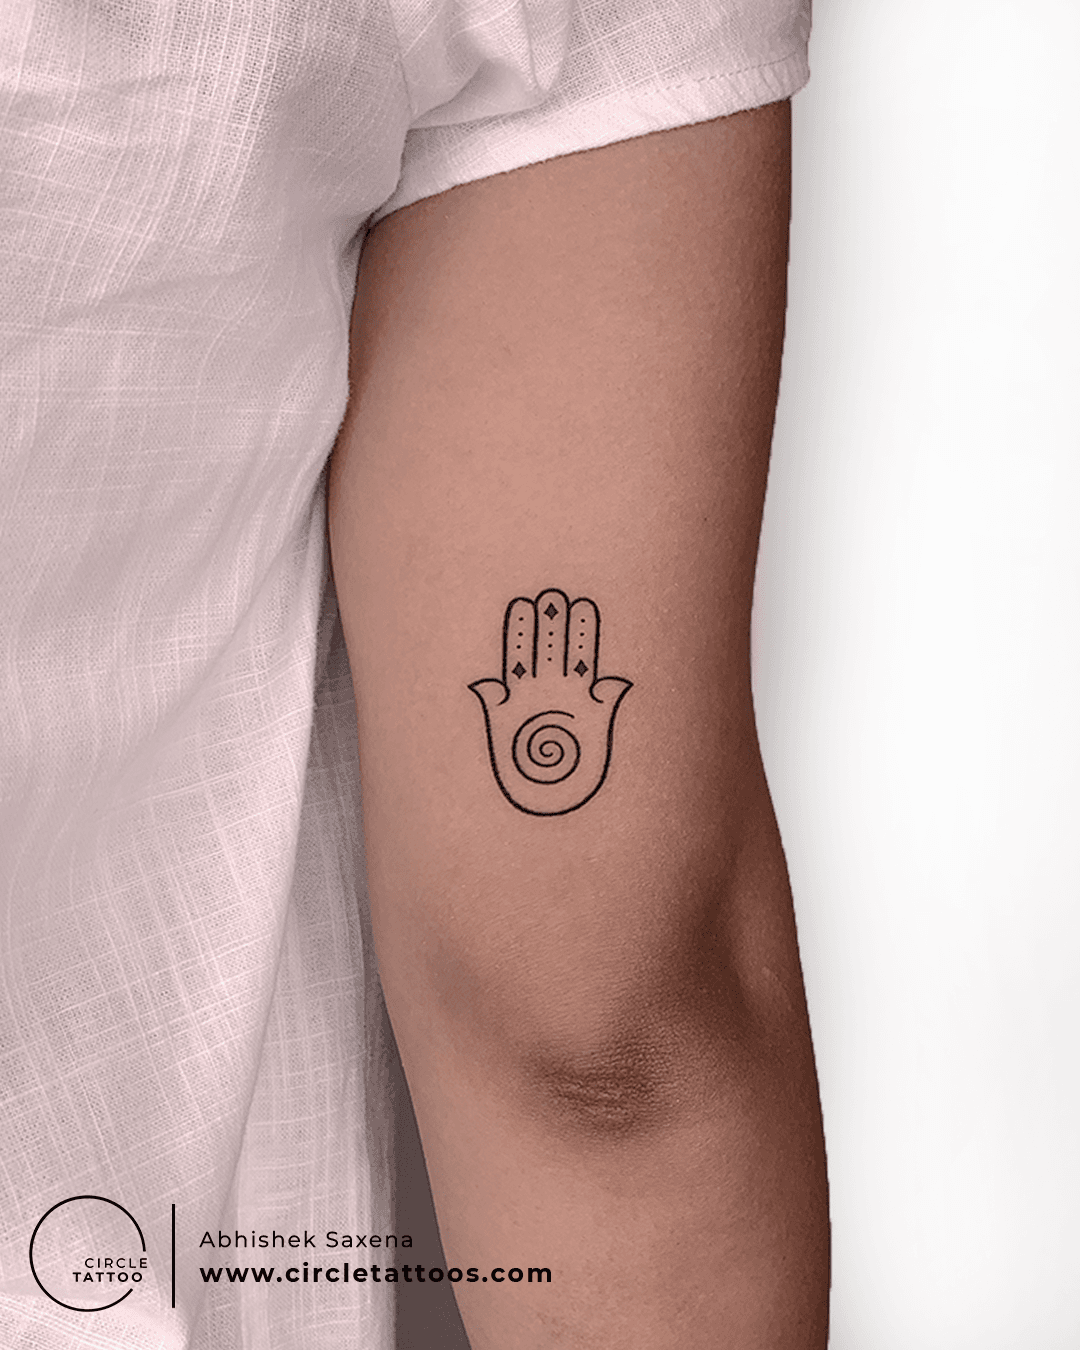 Hamsa tattoo located on the inner forearm.